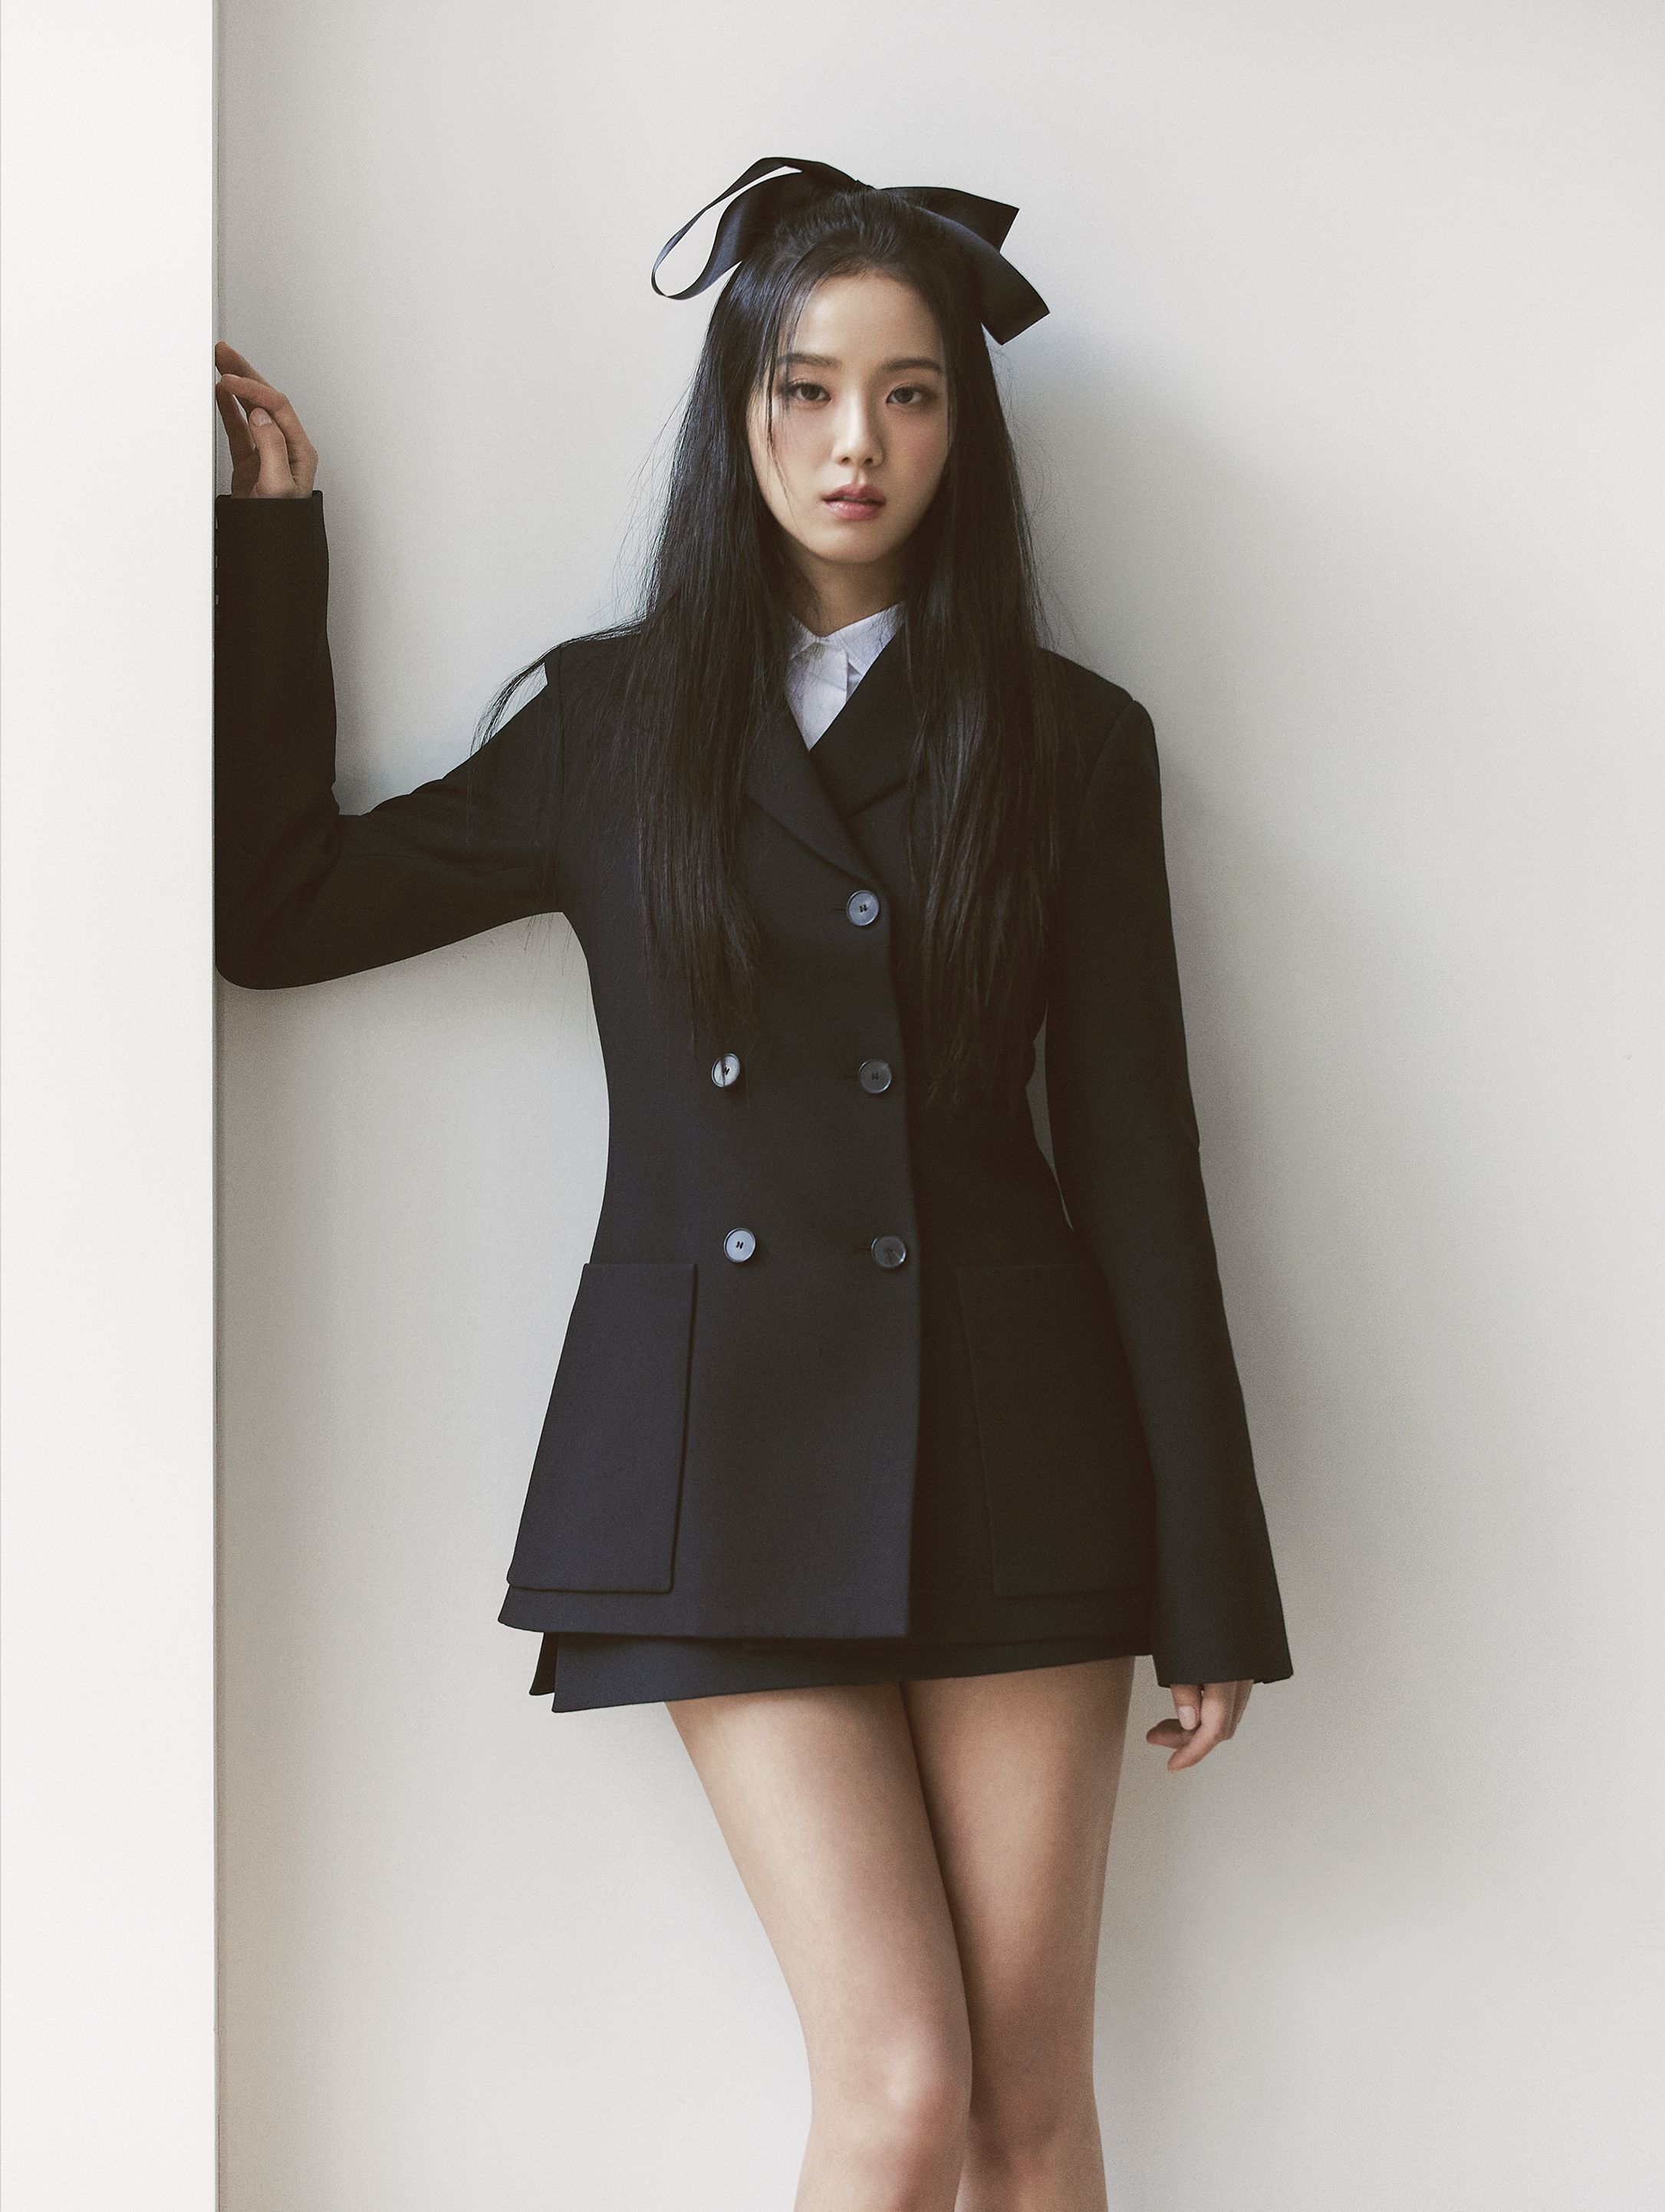 Jisoo for Harpers Bazaar Japan x Dior April 2022 Issue  Greysuitcase